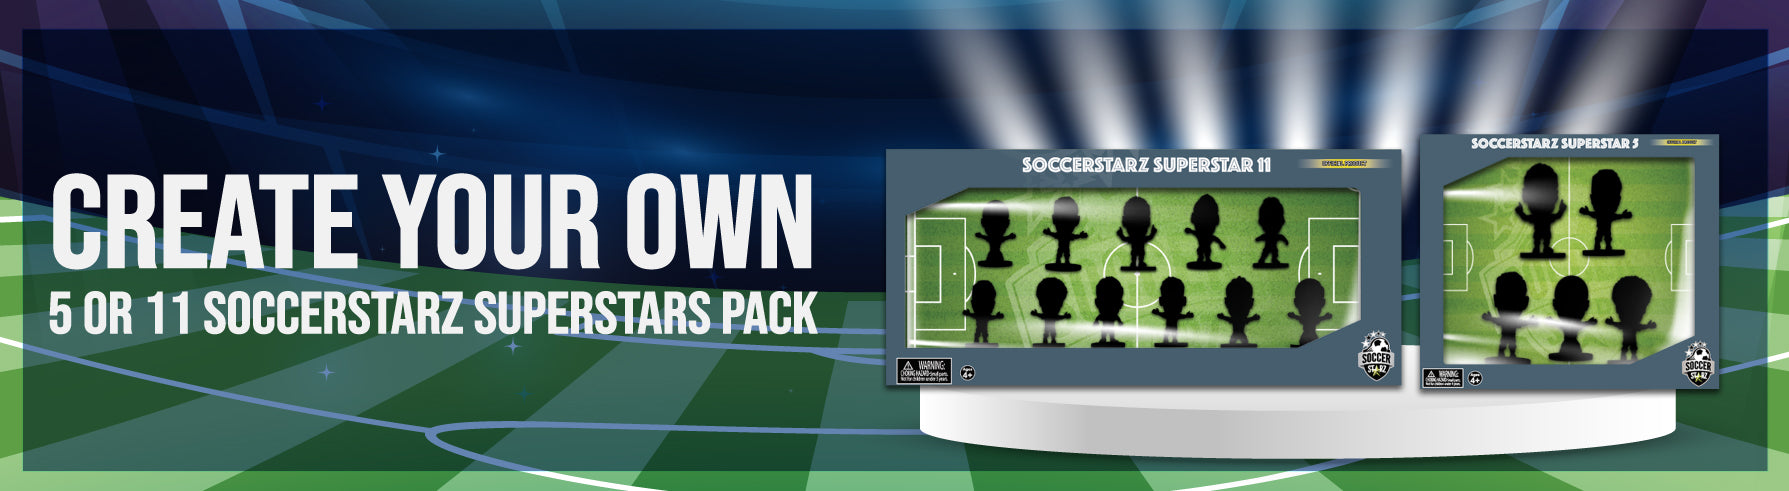 The Official SoccerStarz Shop: The Official SoccerStarz.com Online Store